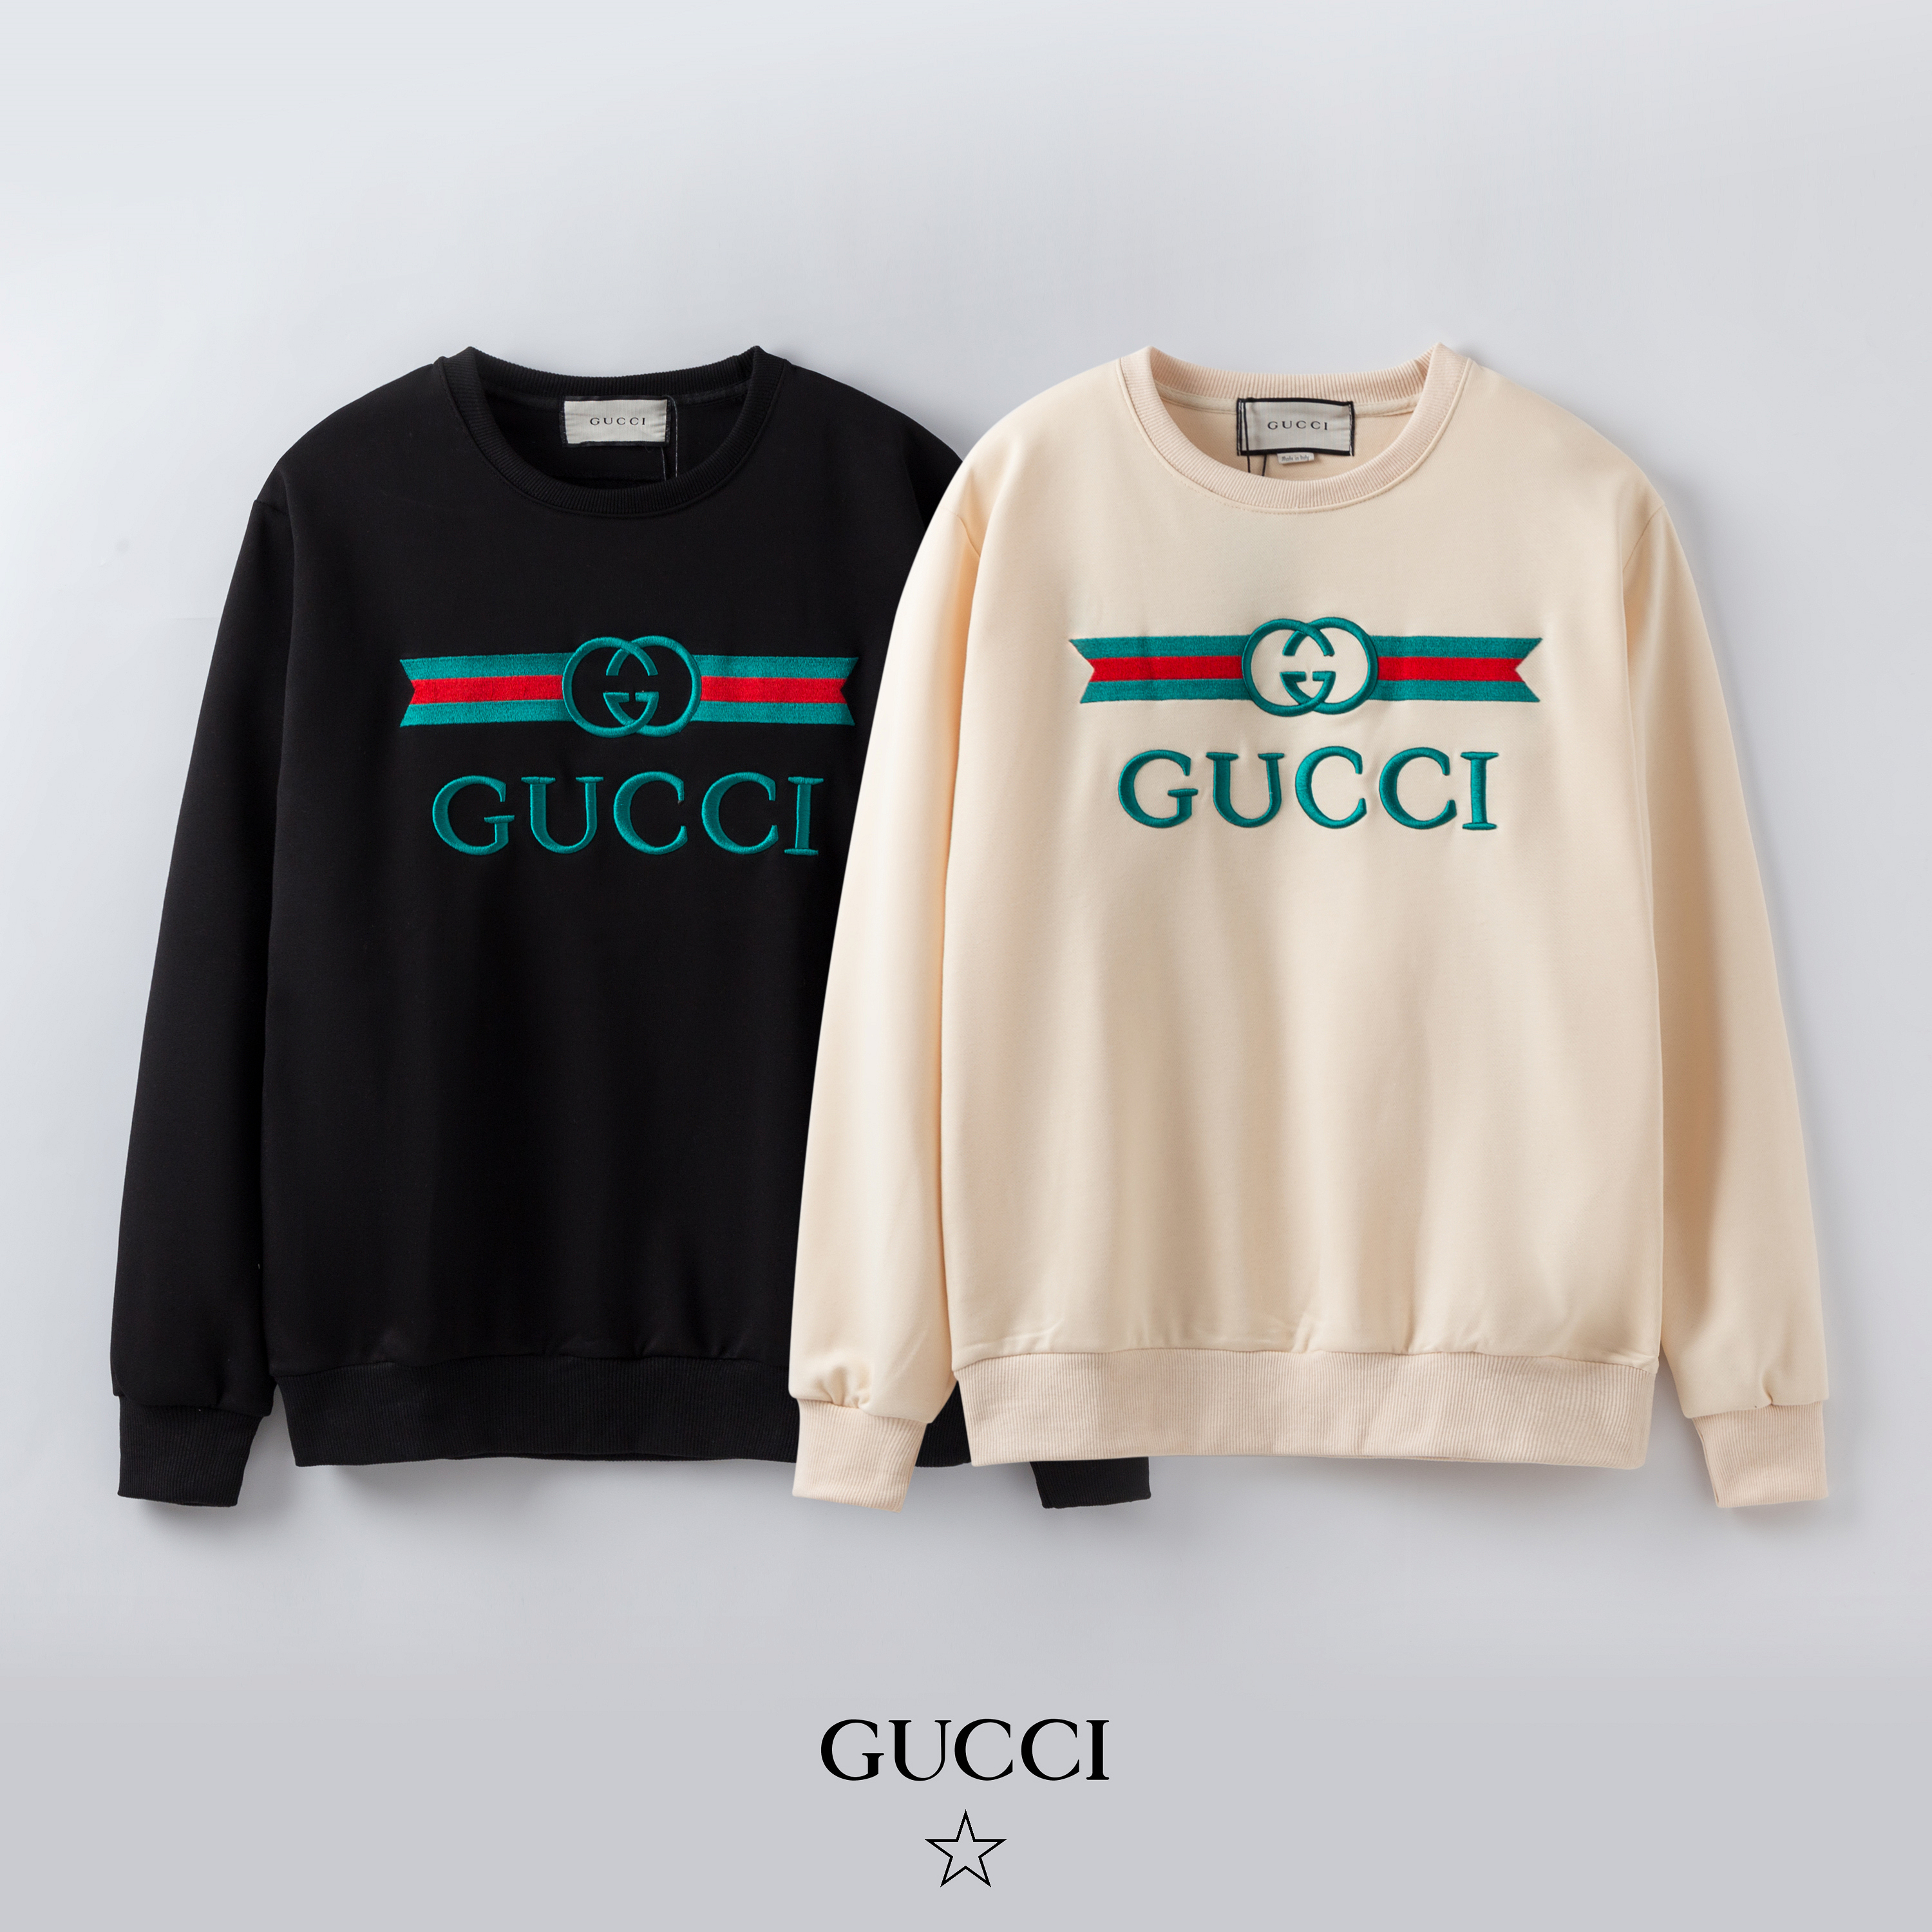 Gucci Sweatshirts Aliexpress Hidden 